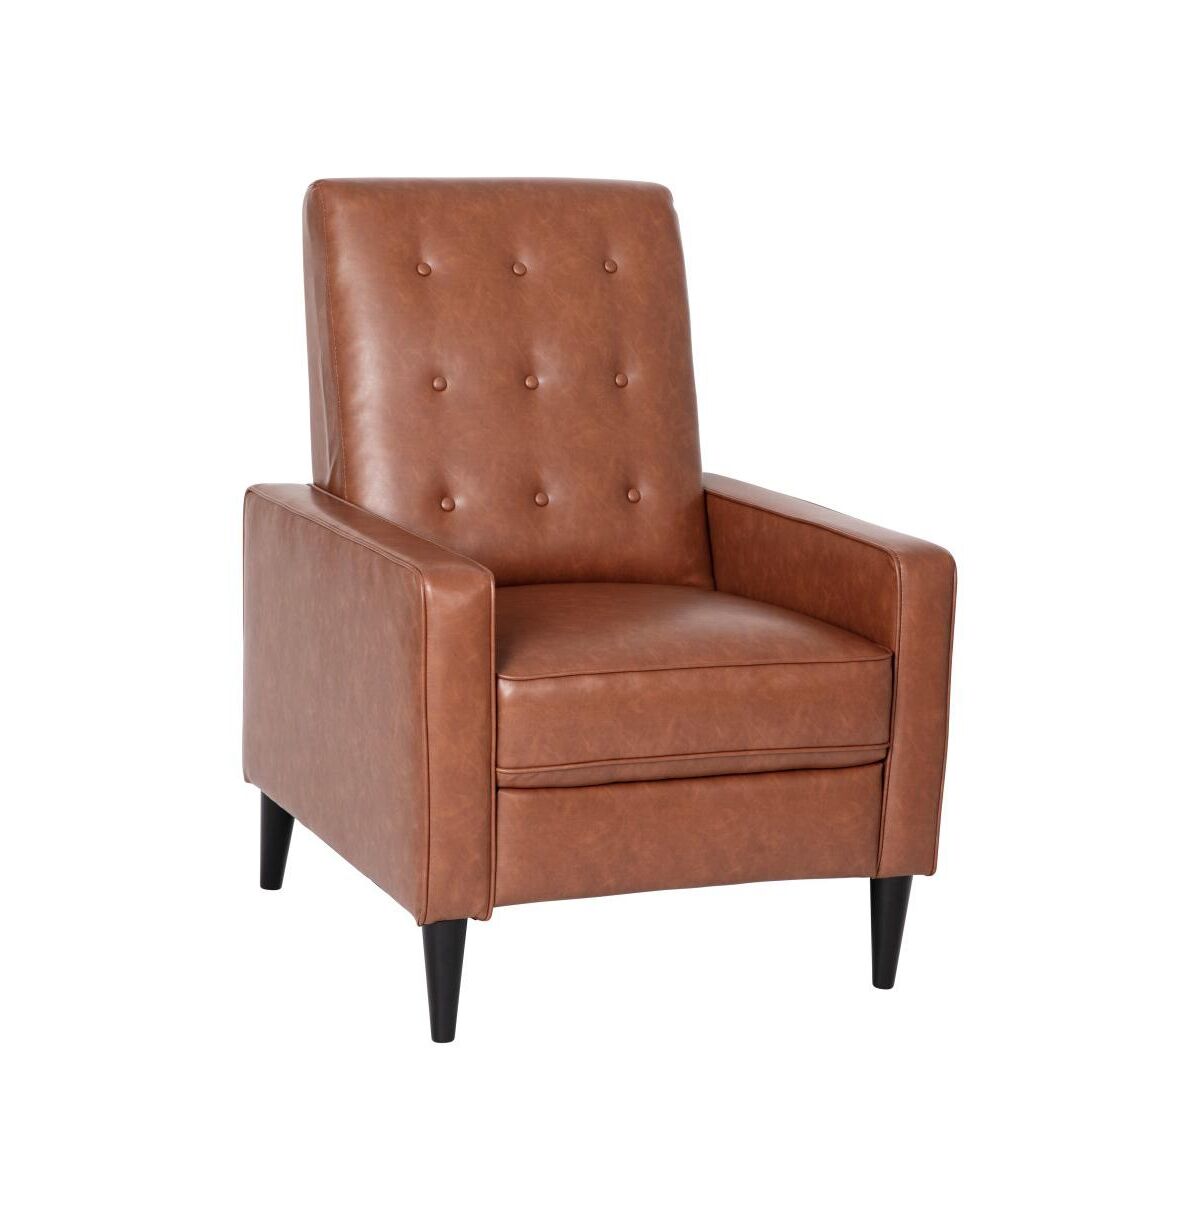 Merrick Lane Darcy Recliner Chair Mid-Century Modern Tufted Upholstery Ergonomic Push Back Living Room Recliner - Cognac brown